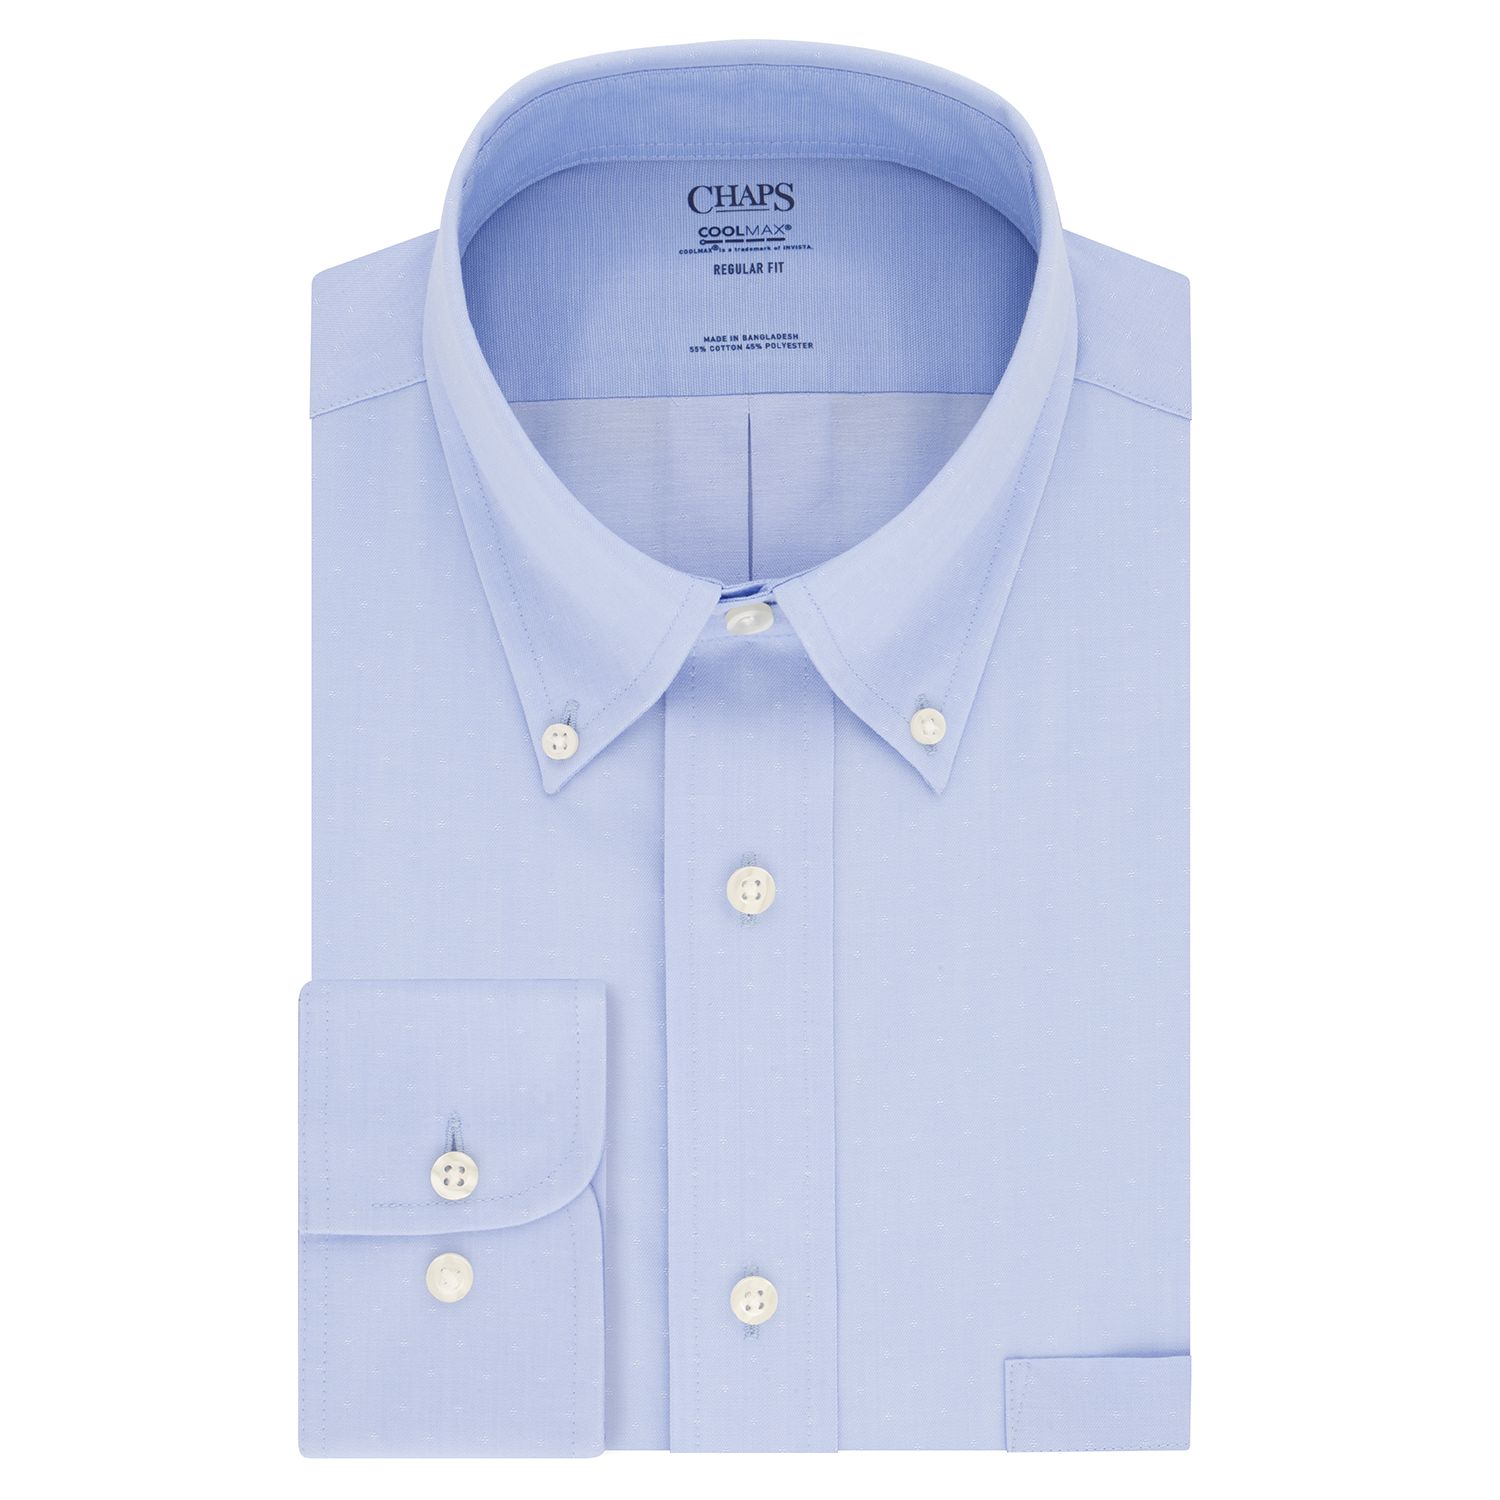 Men's Chaps Cool Max Slim-Fit Dress Shirt